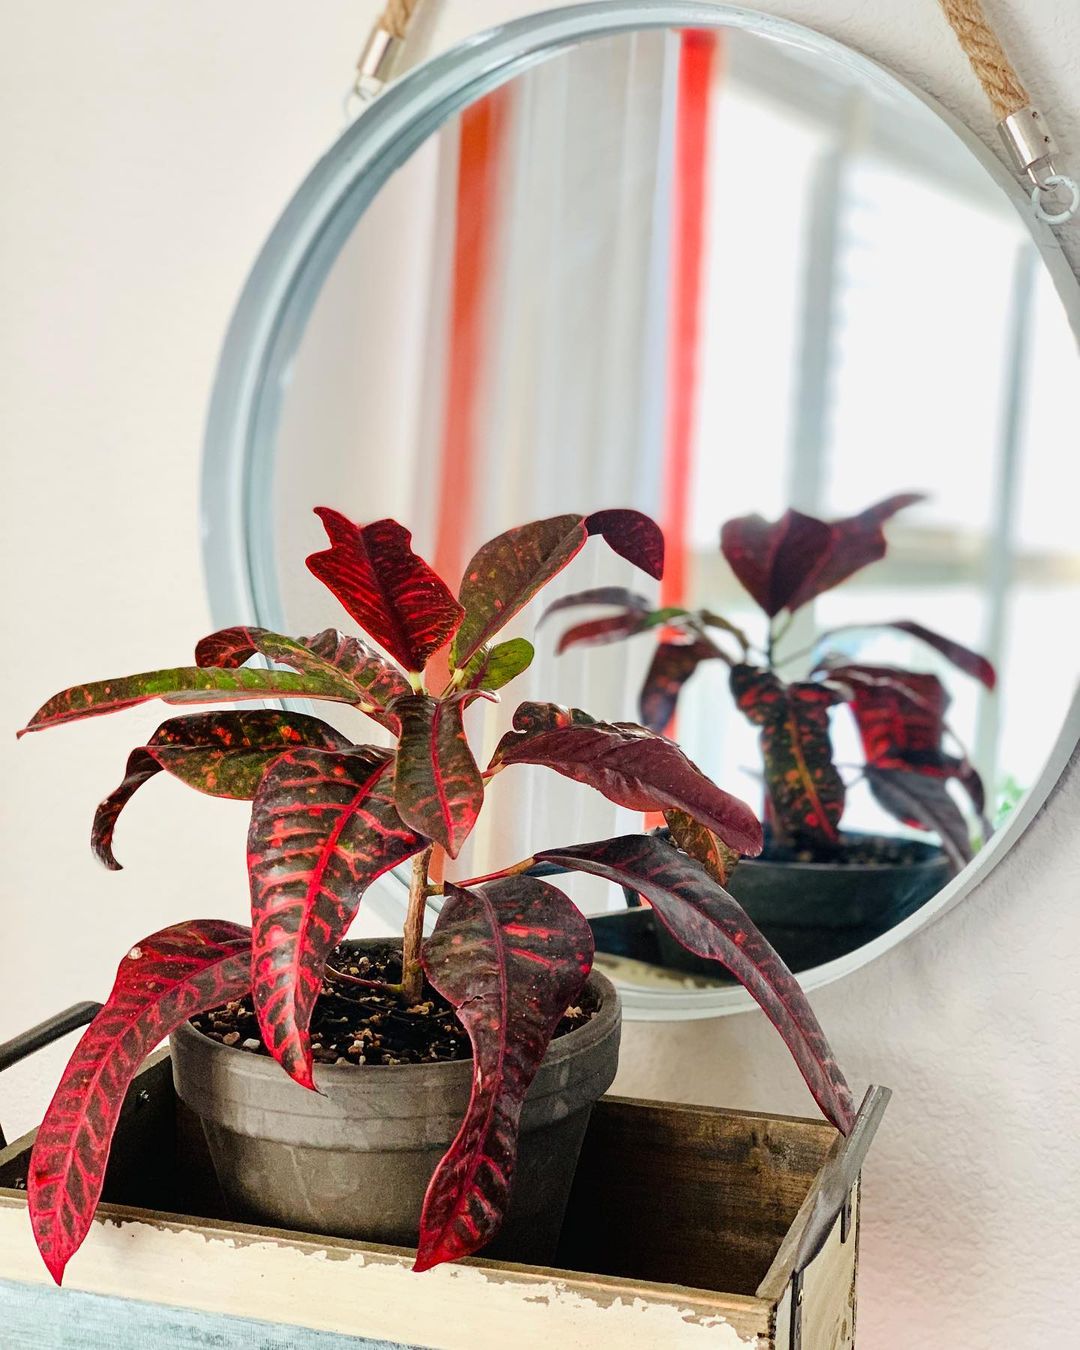 Red variation of the croton plant. Photo by Instagram user @theoriginalplantster.